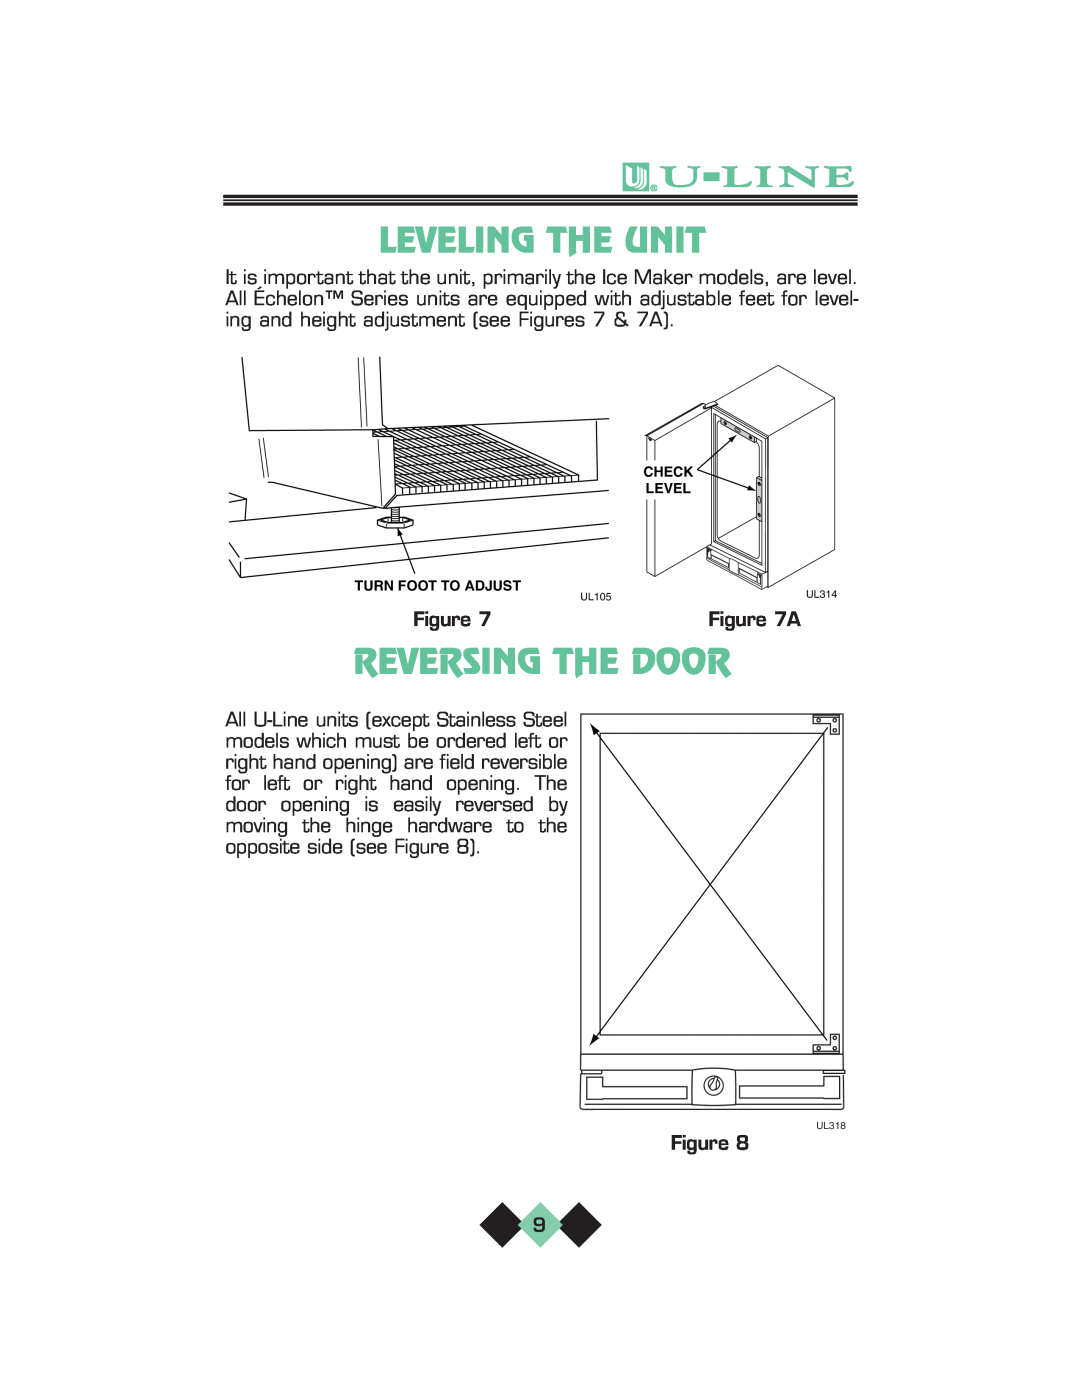 U-Line pmn manual Leveling The Unit, Reversing The Door 